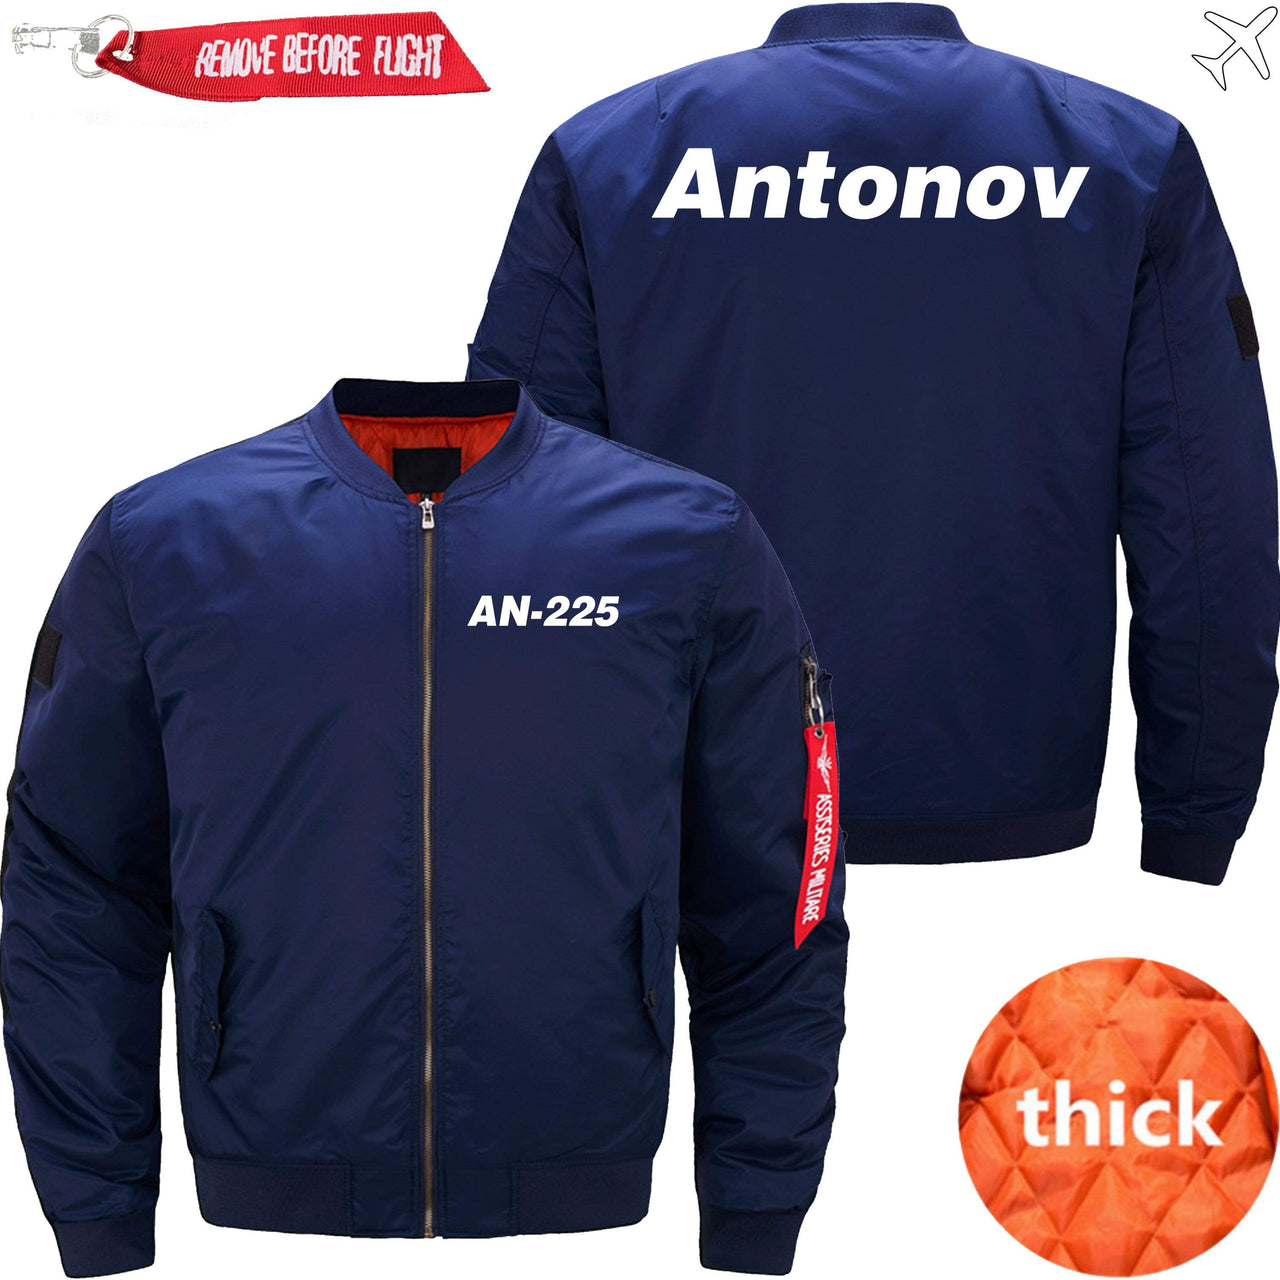 ANTONOV AN-225 - JACKET THE AV8R